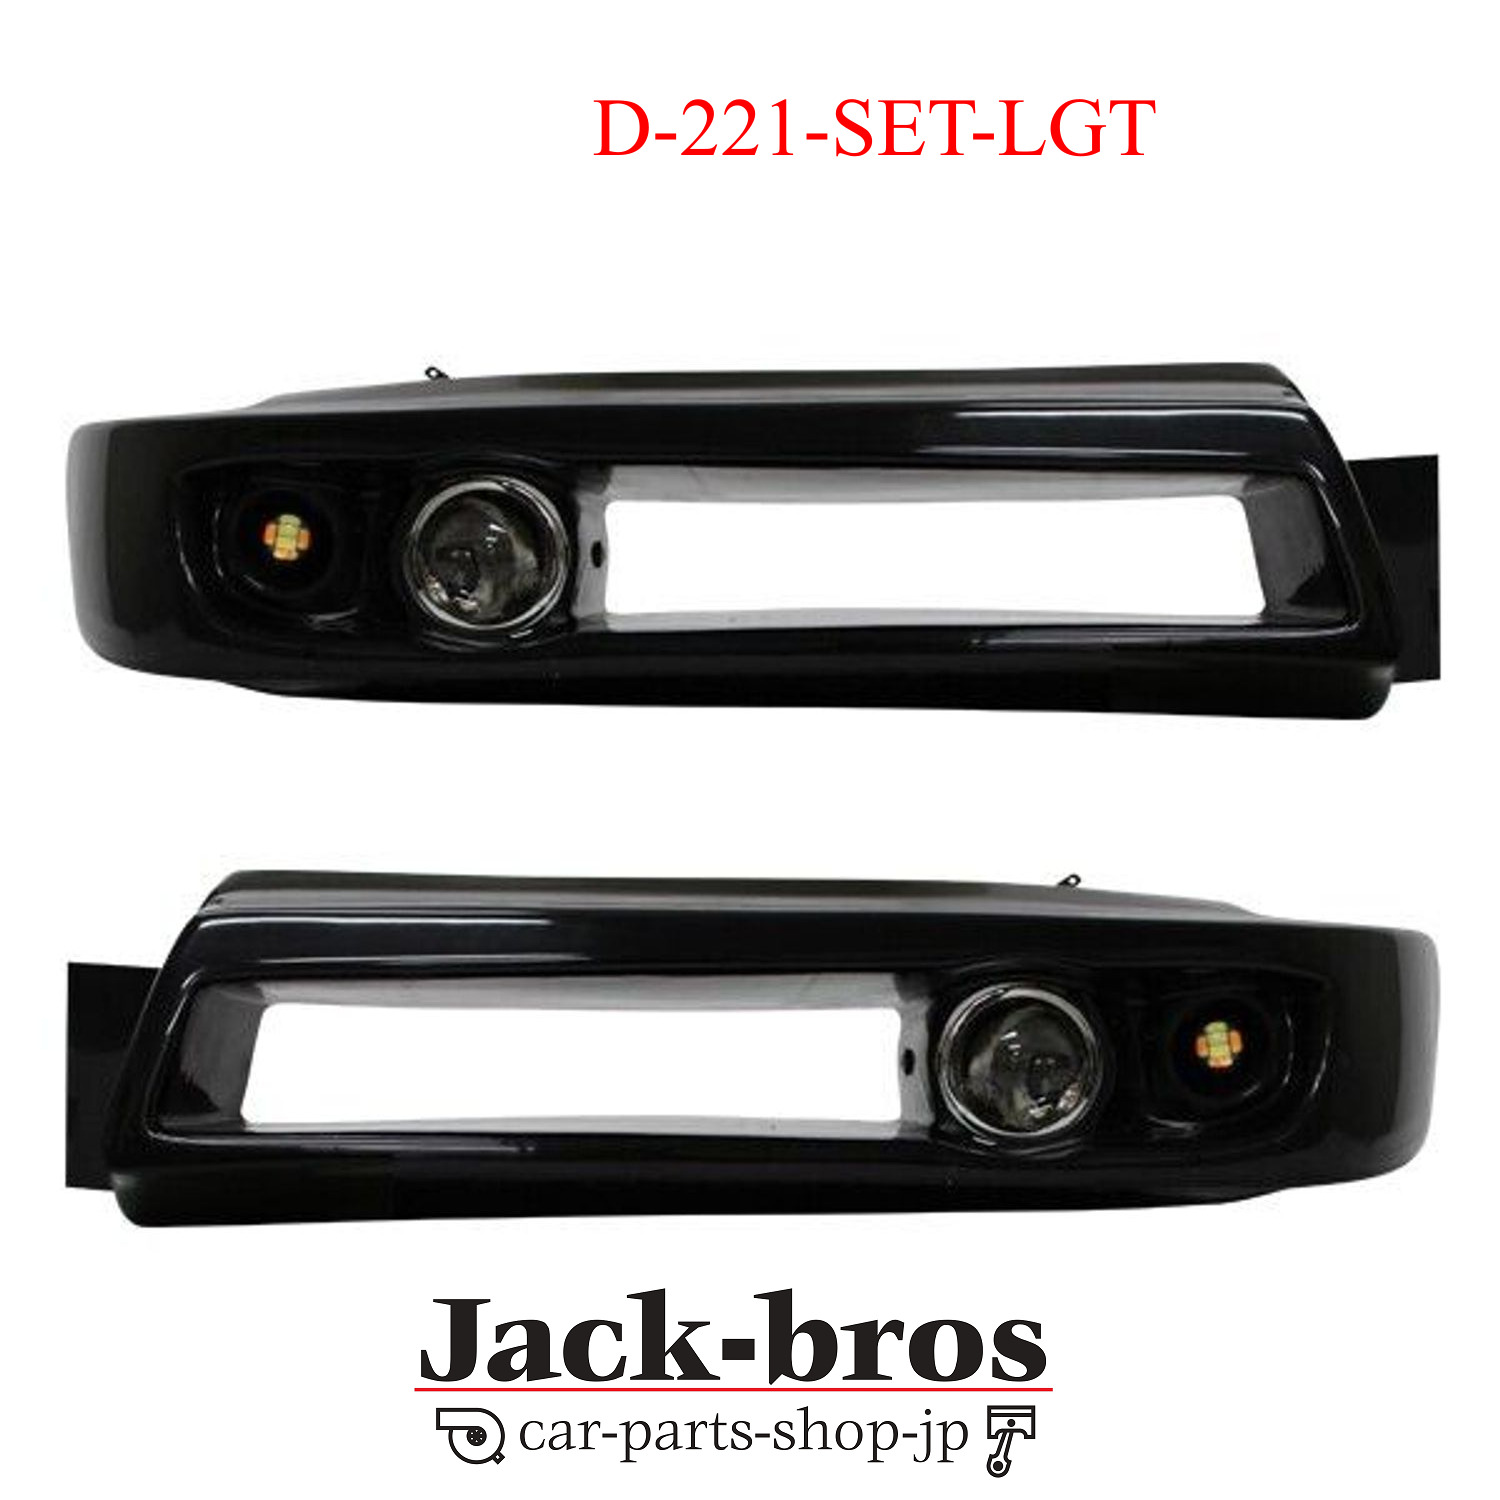 ORIGIN Labo Combat eye duct Headlight projector LED bulb For S13 Silvia 240SX